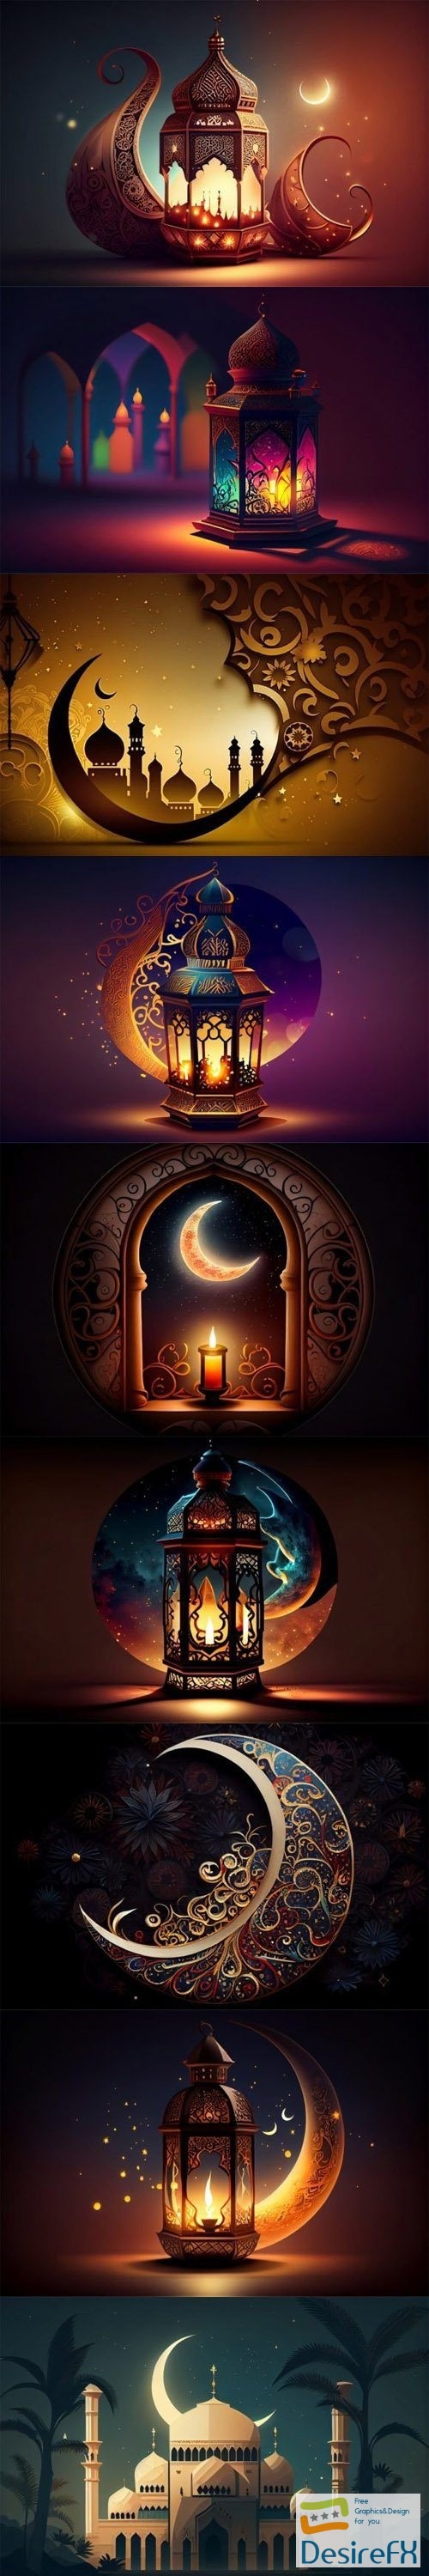 Ramadan Kareem Themes - 9 Awesome Backgrounds